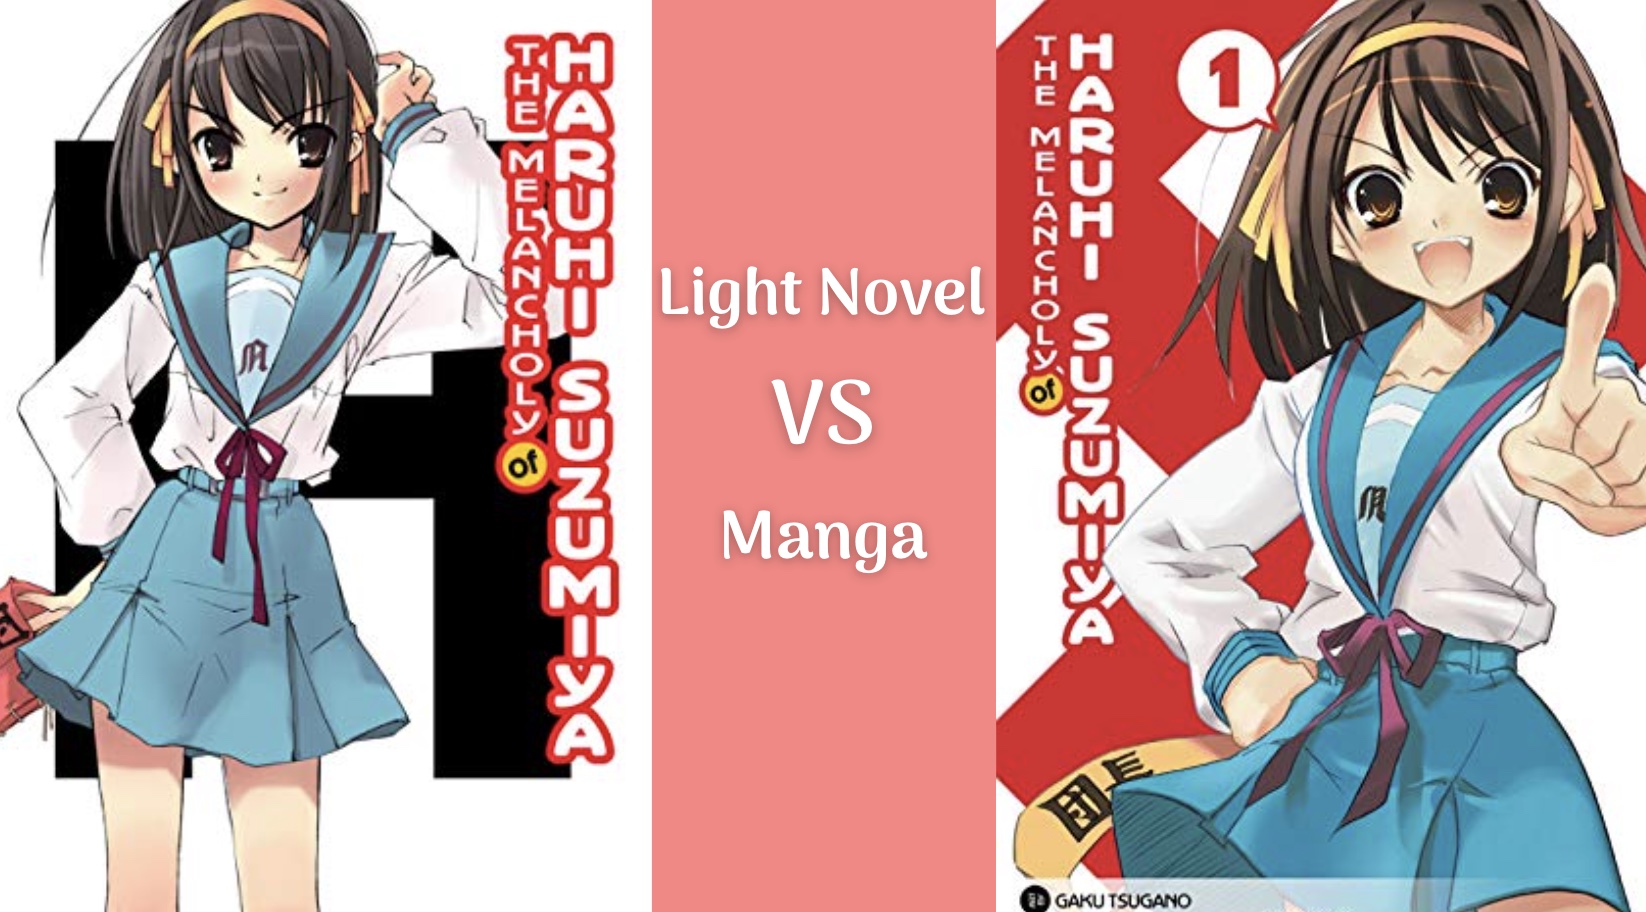 Haruhi Suzumiya Light Novel or Manga